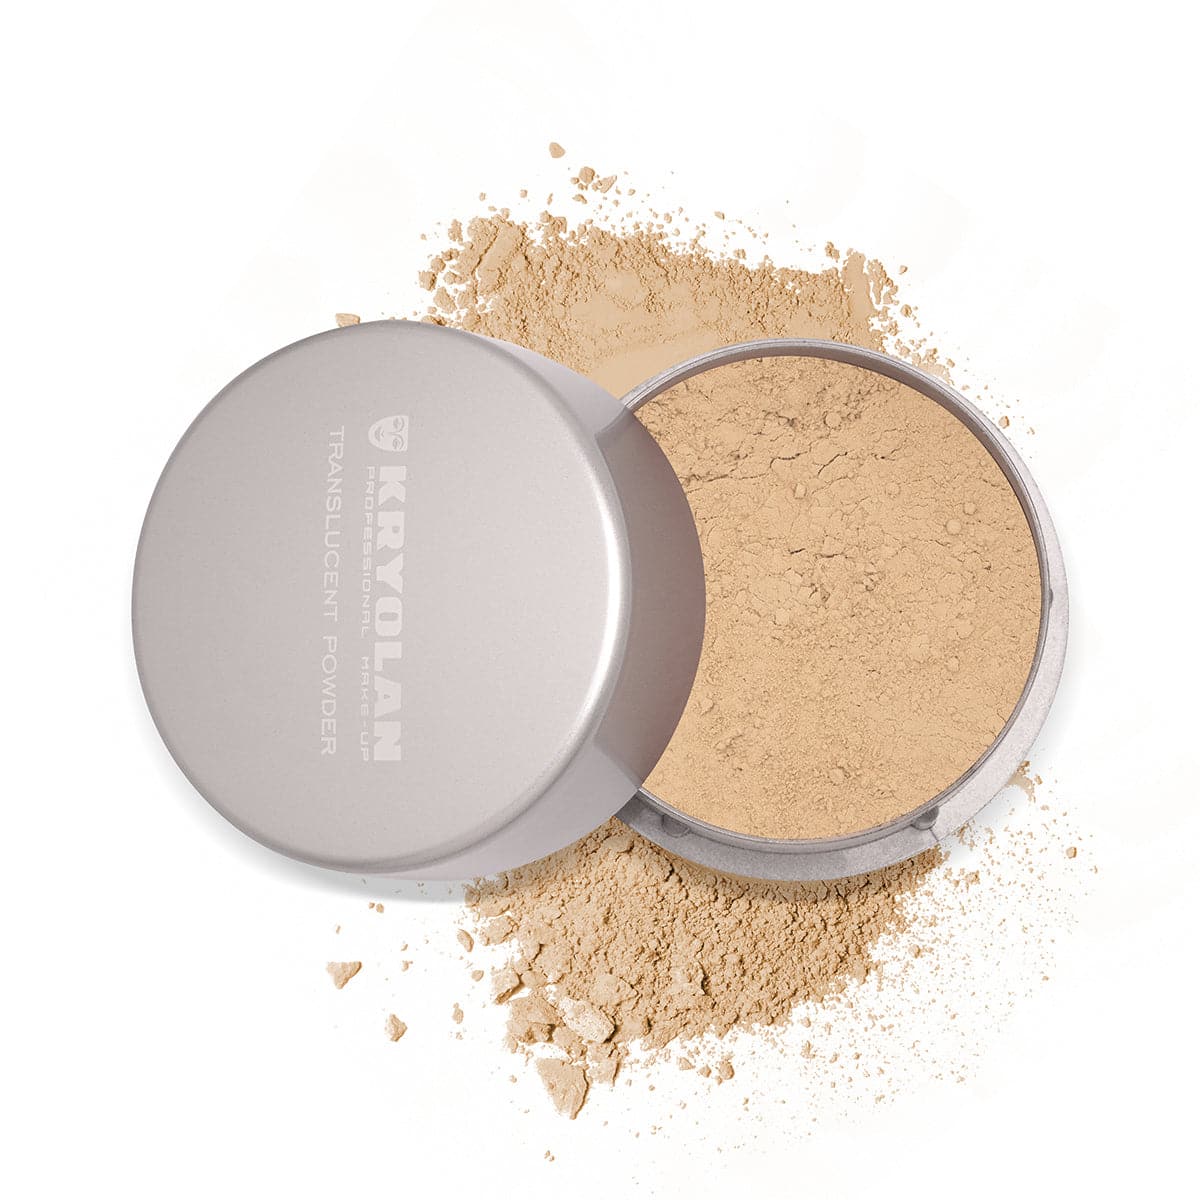 Kryolan Translucent Powder - TL 9 - Premium Health & Beauty from Kryolan - Just Rs 5540.00! Shop now at Cozmetica